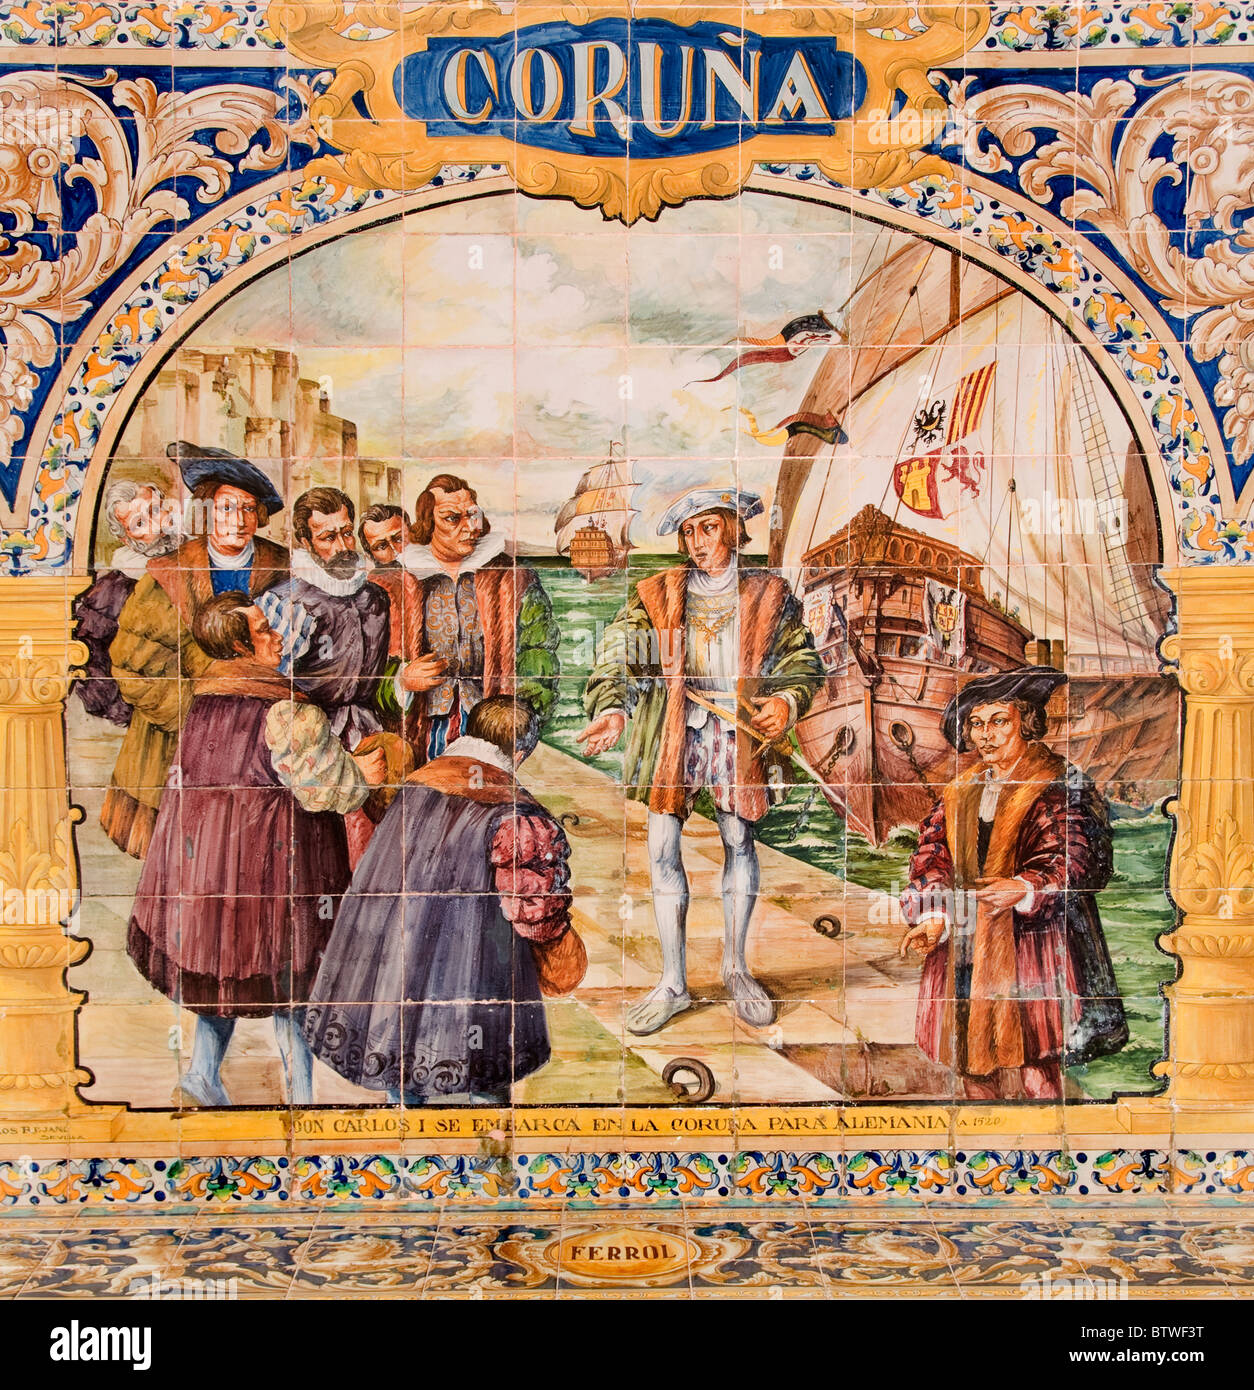 König Don Carlos 1 Coruna Plaza de Espana Sevilla Spanien Andalusien Coruna Stockfoto